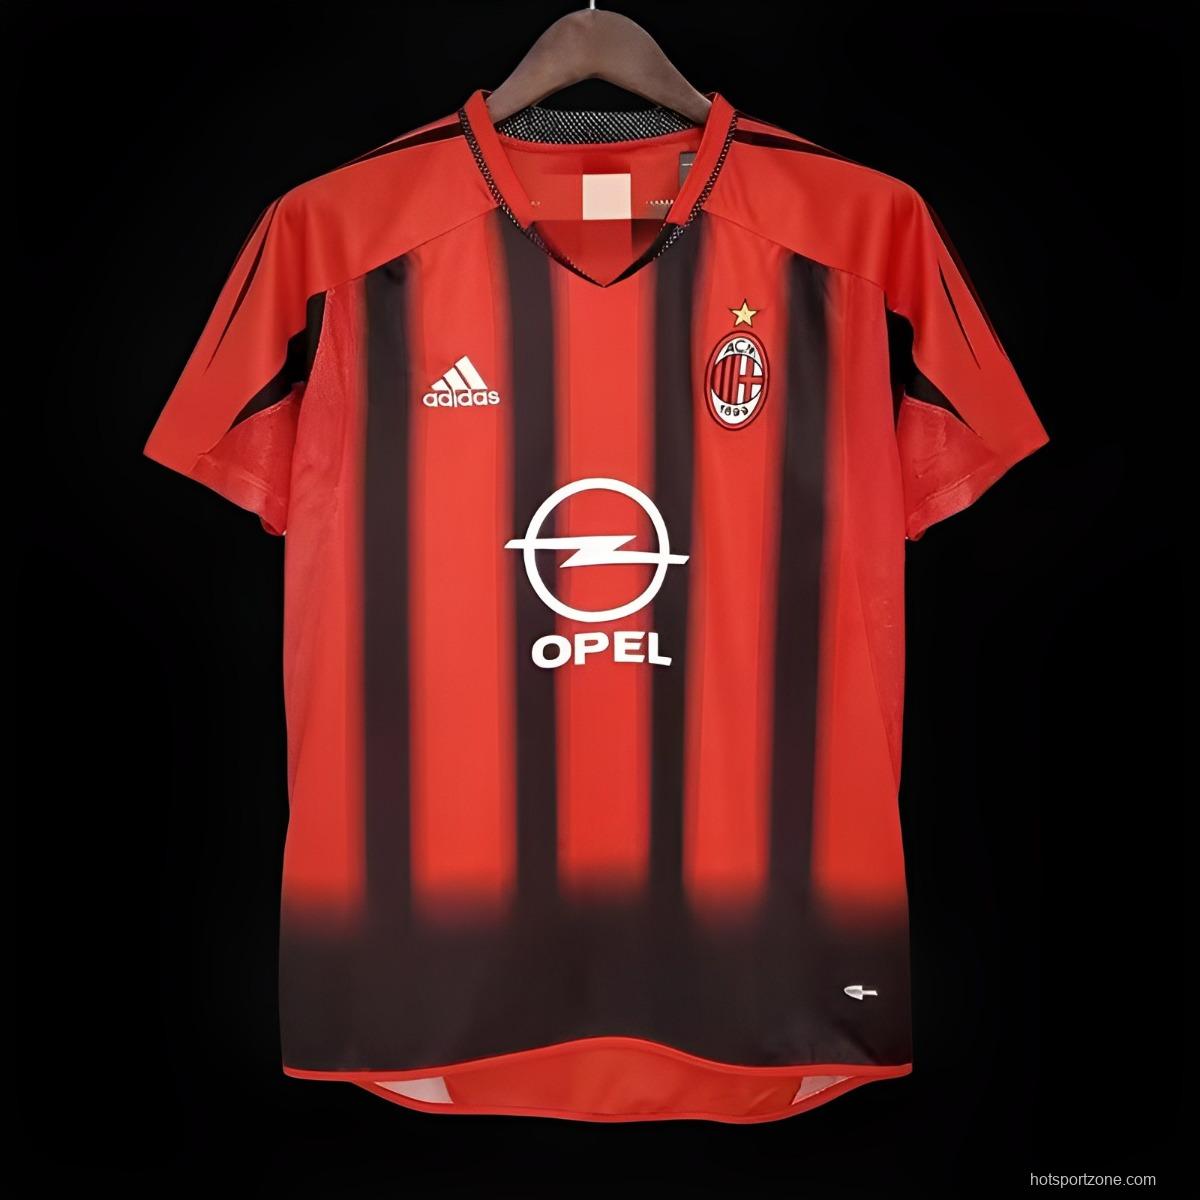 Retro 04/05 AC Milan Home Authentic Jersey